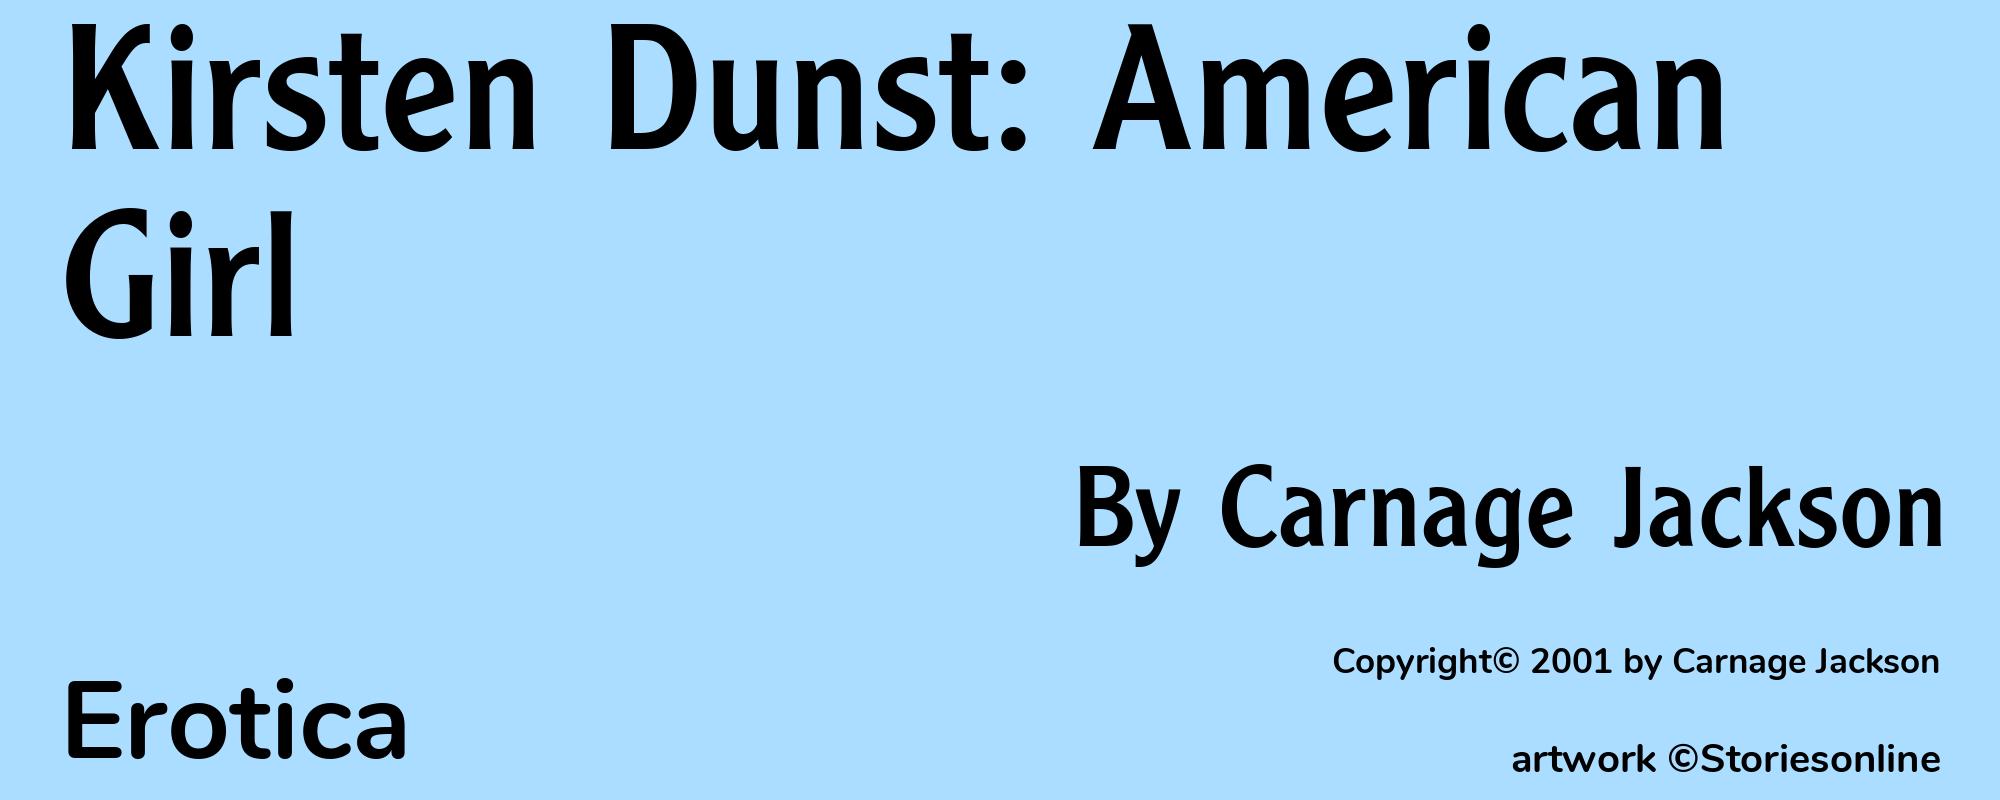 Kirsten Dunst: American Girl - Cover